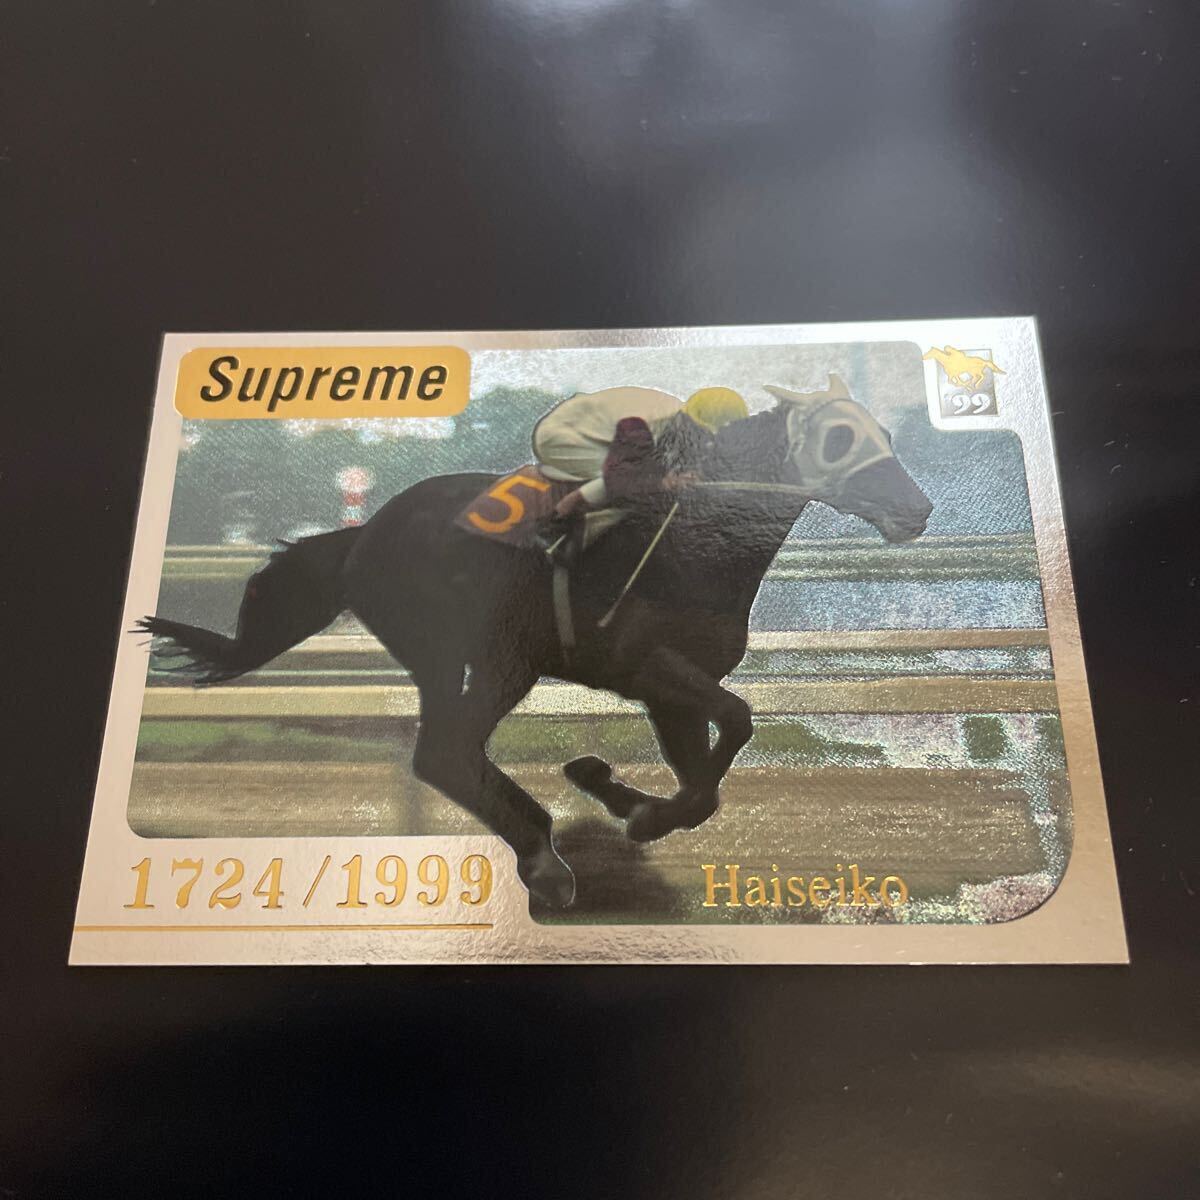  высокий Seiko Thoroughbred Card 1999 год внизу половина период Supreme